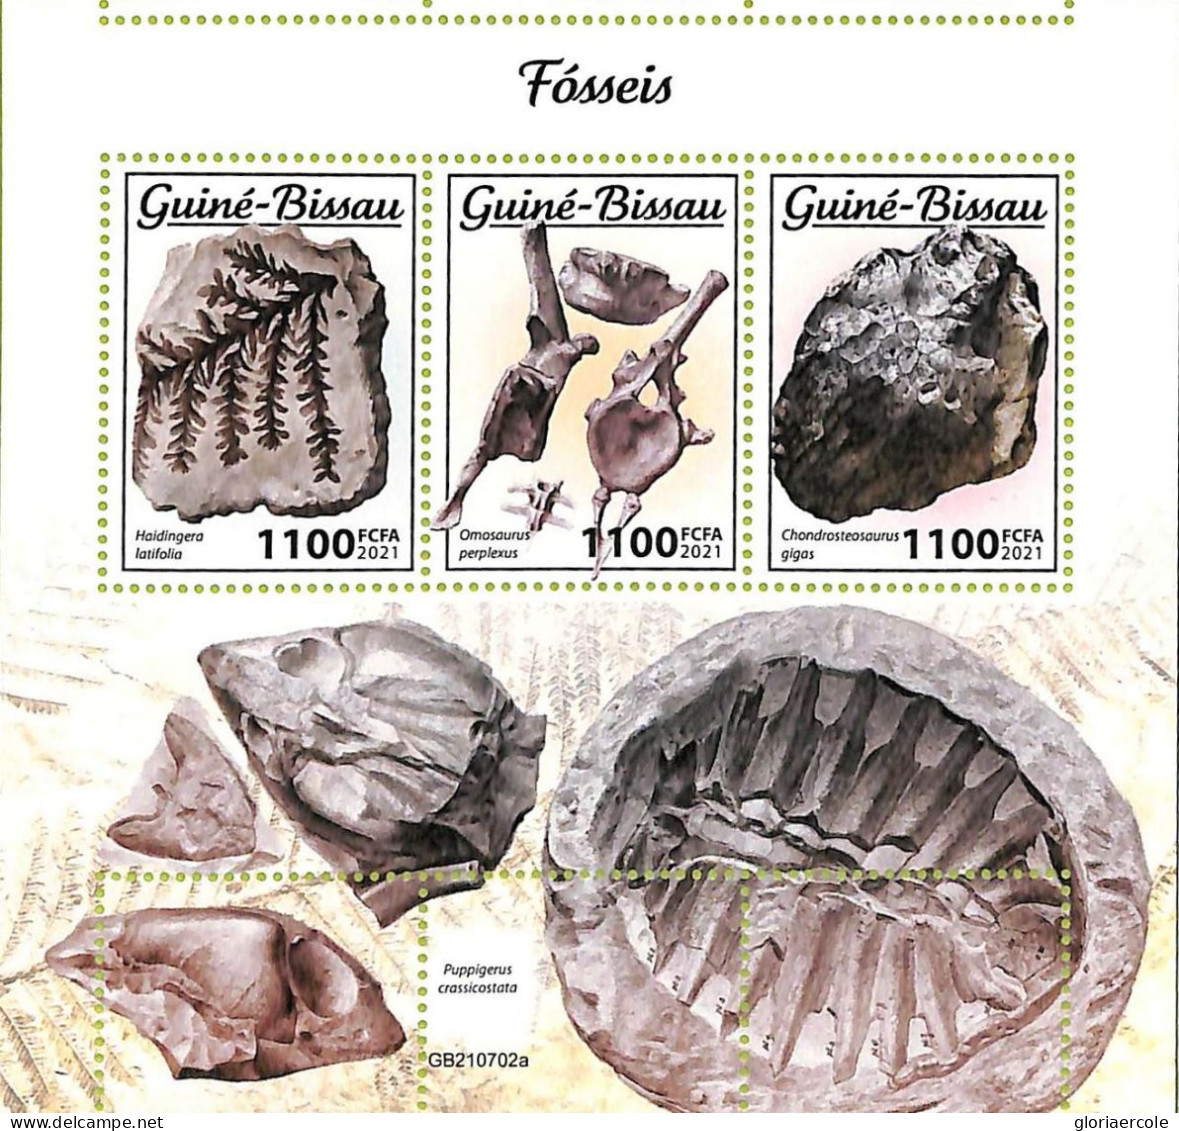 A7616 - GUINE BISSAU - ERROR MISPERF Stamp Sheet - 2021 - Fossils - Fossils